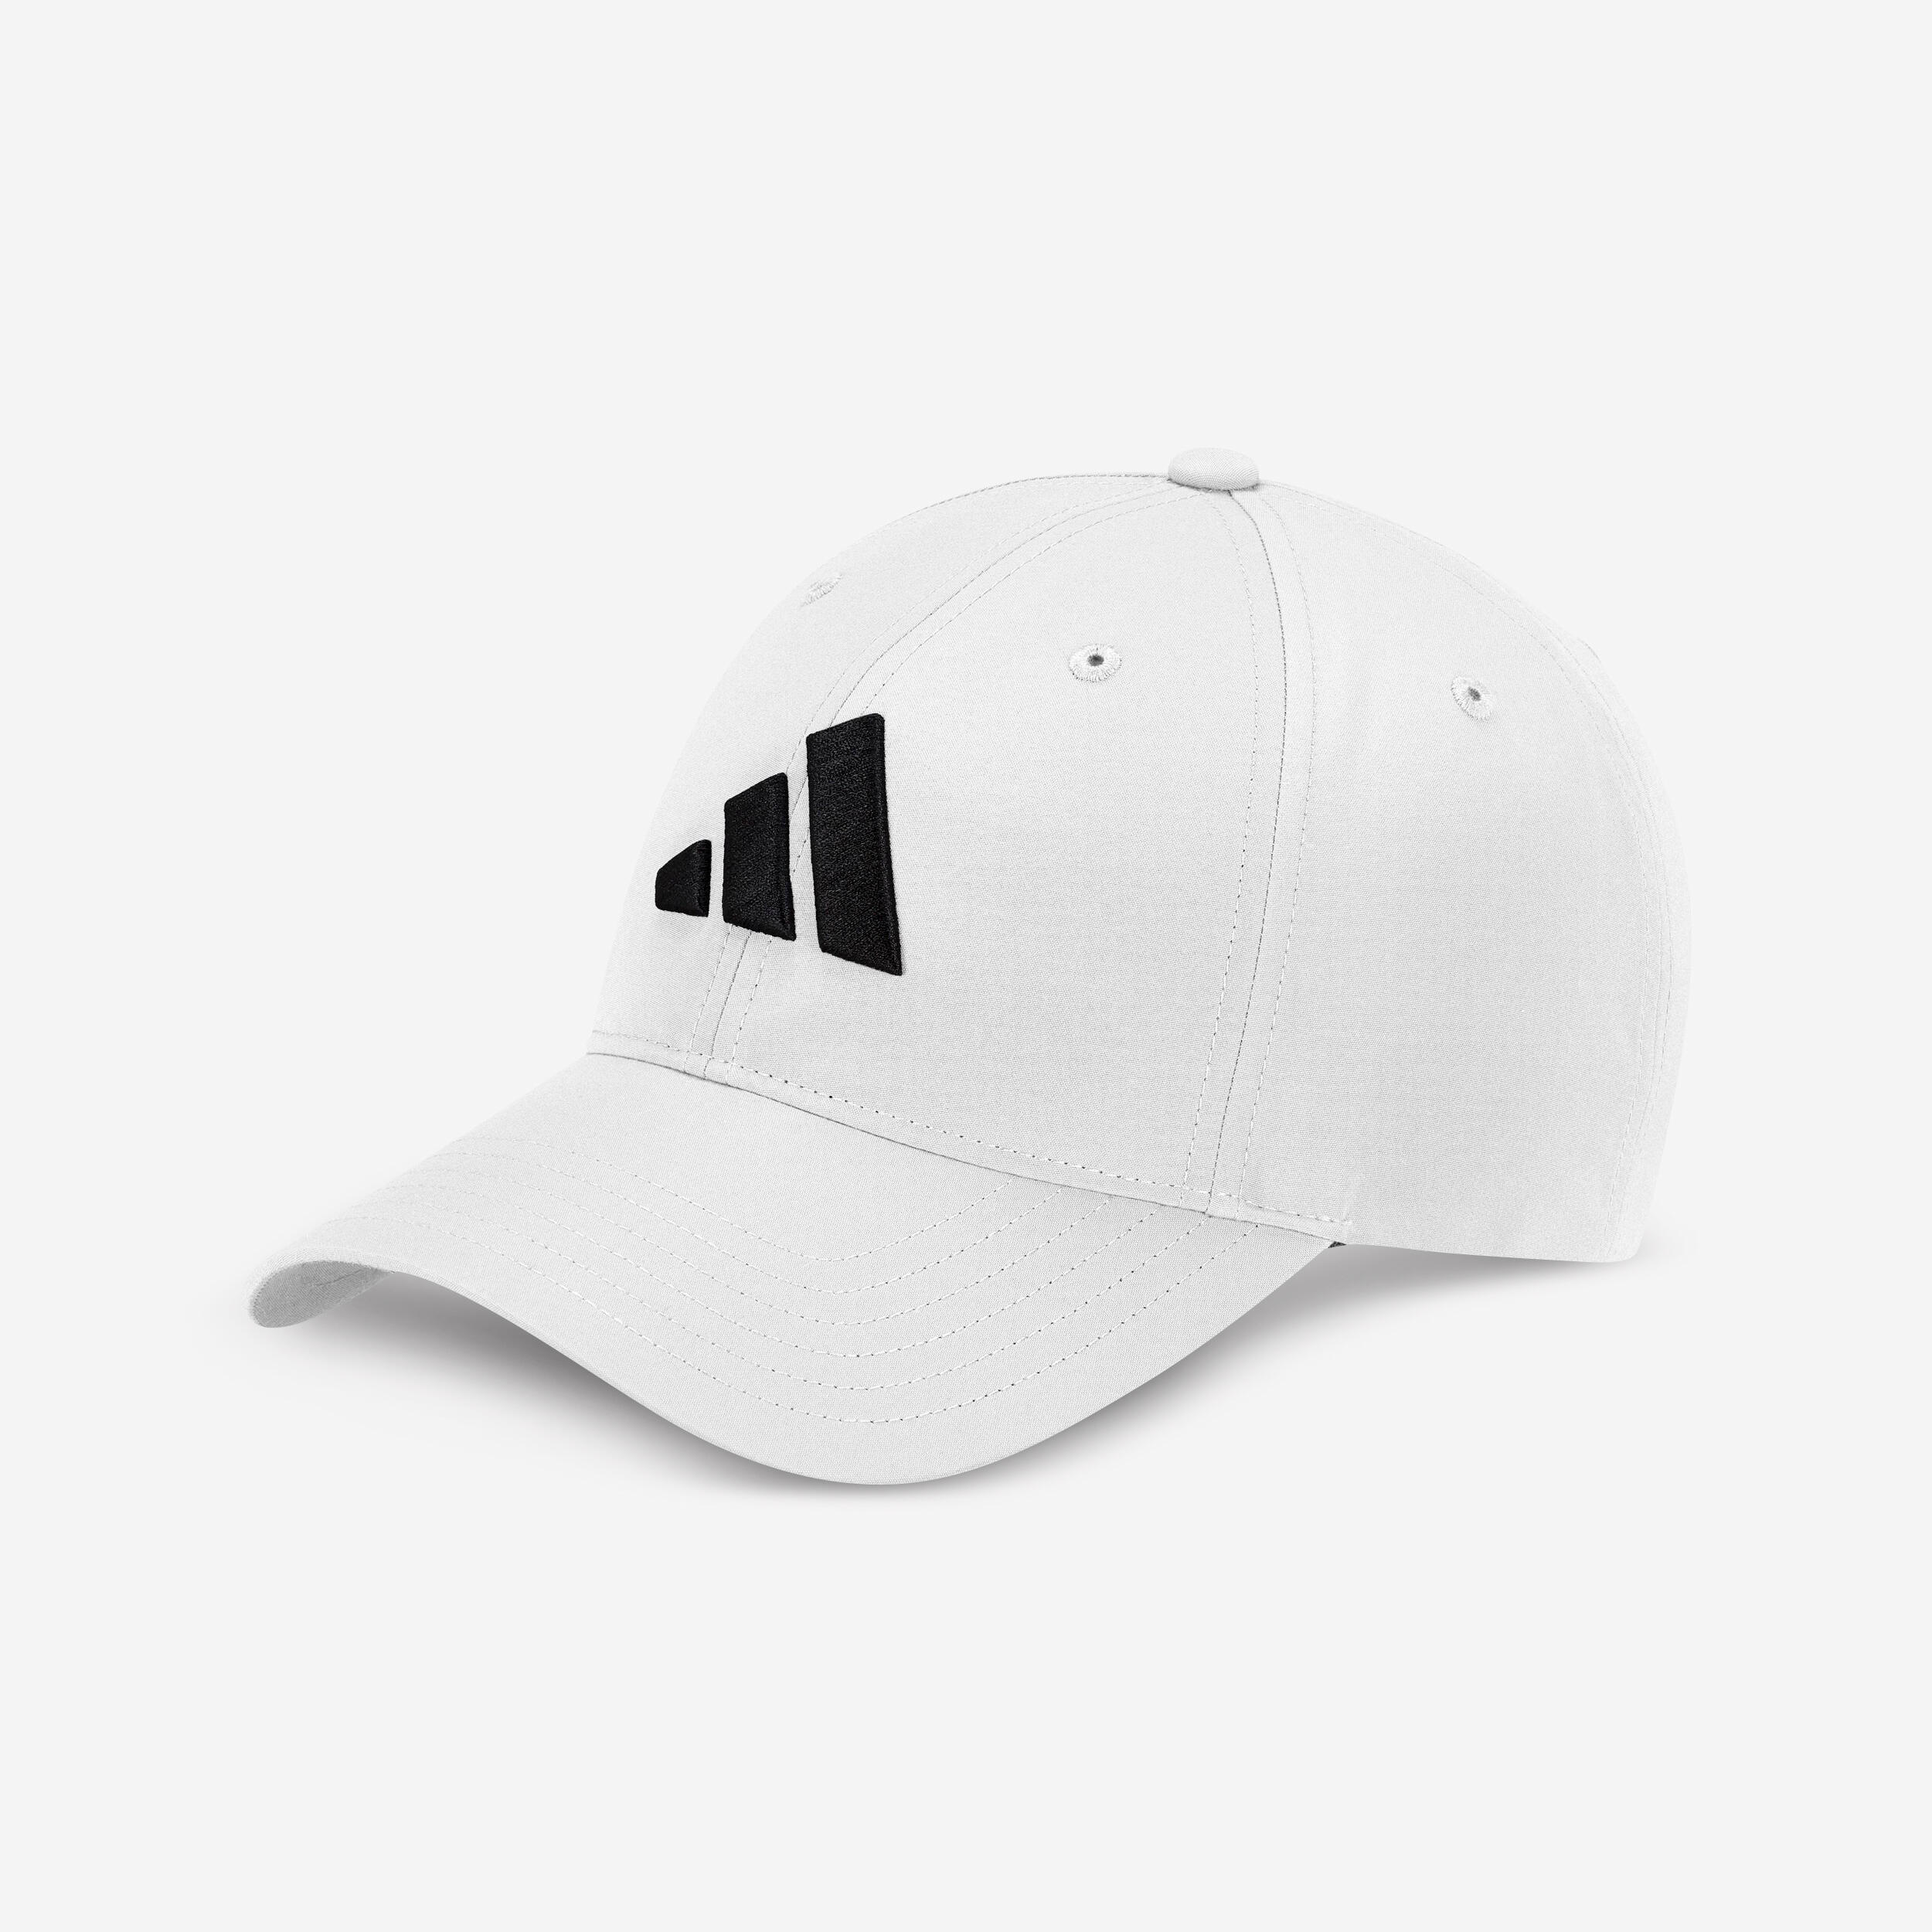 ADIDAS Adult Golf Cap adidas - White